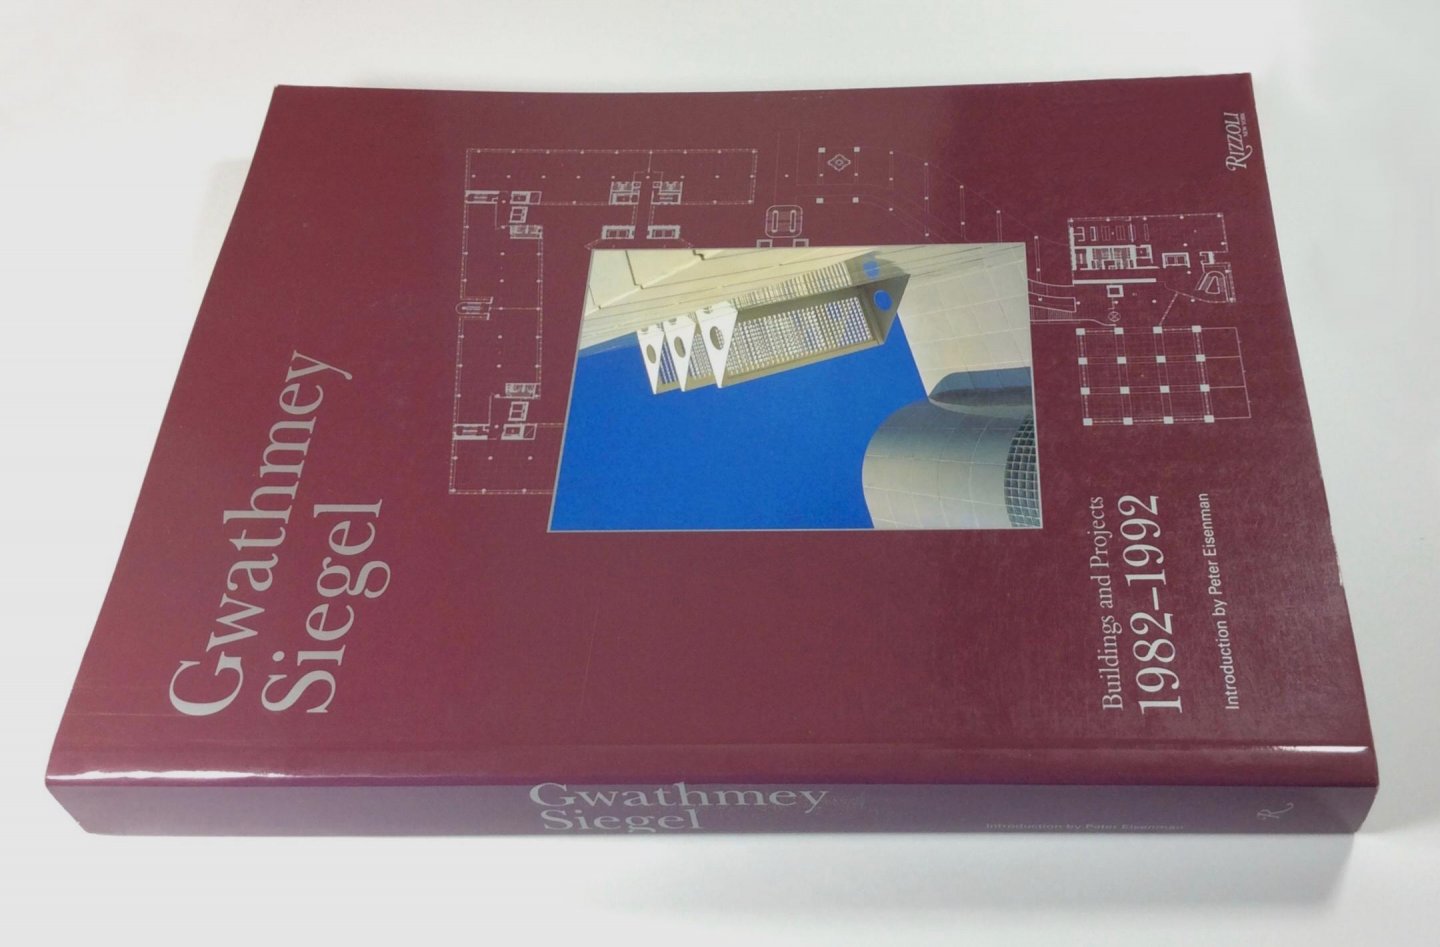 Siegel, Gwathmey - Collins, Brad & Kasprowicz, Diane (Ed.) - Gwathmey Siegel. Buildings and Projects 1982 - 1992